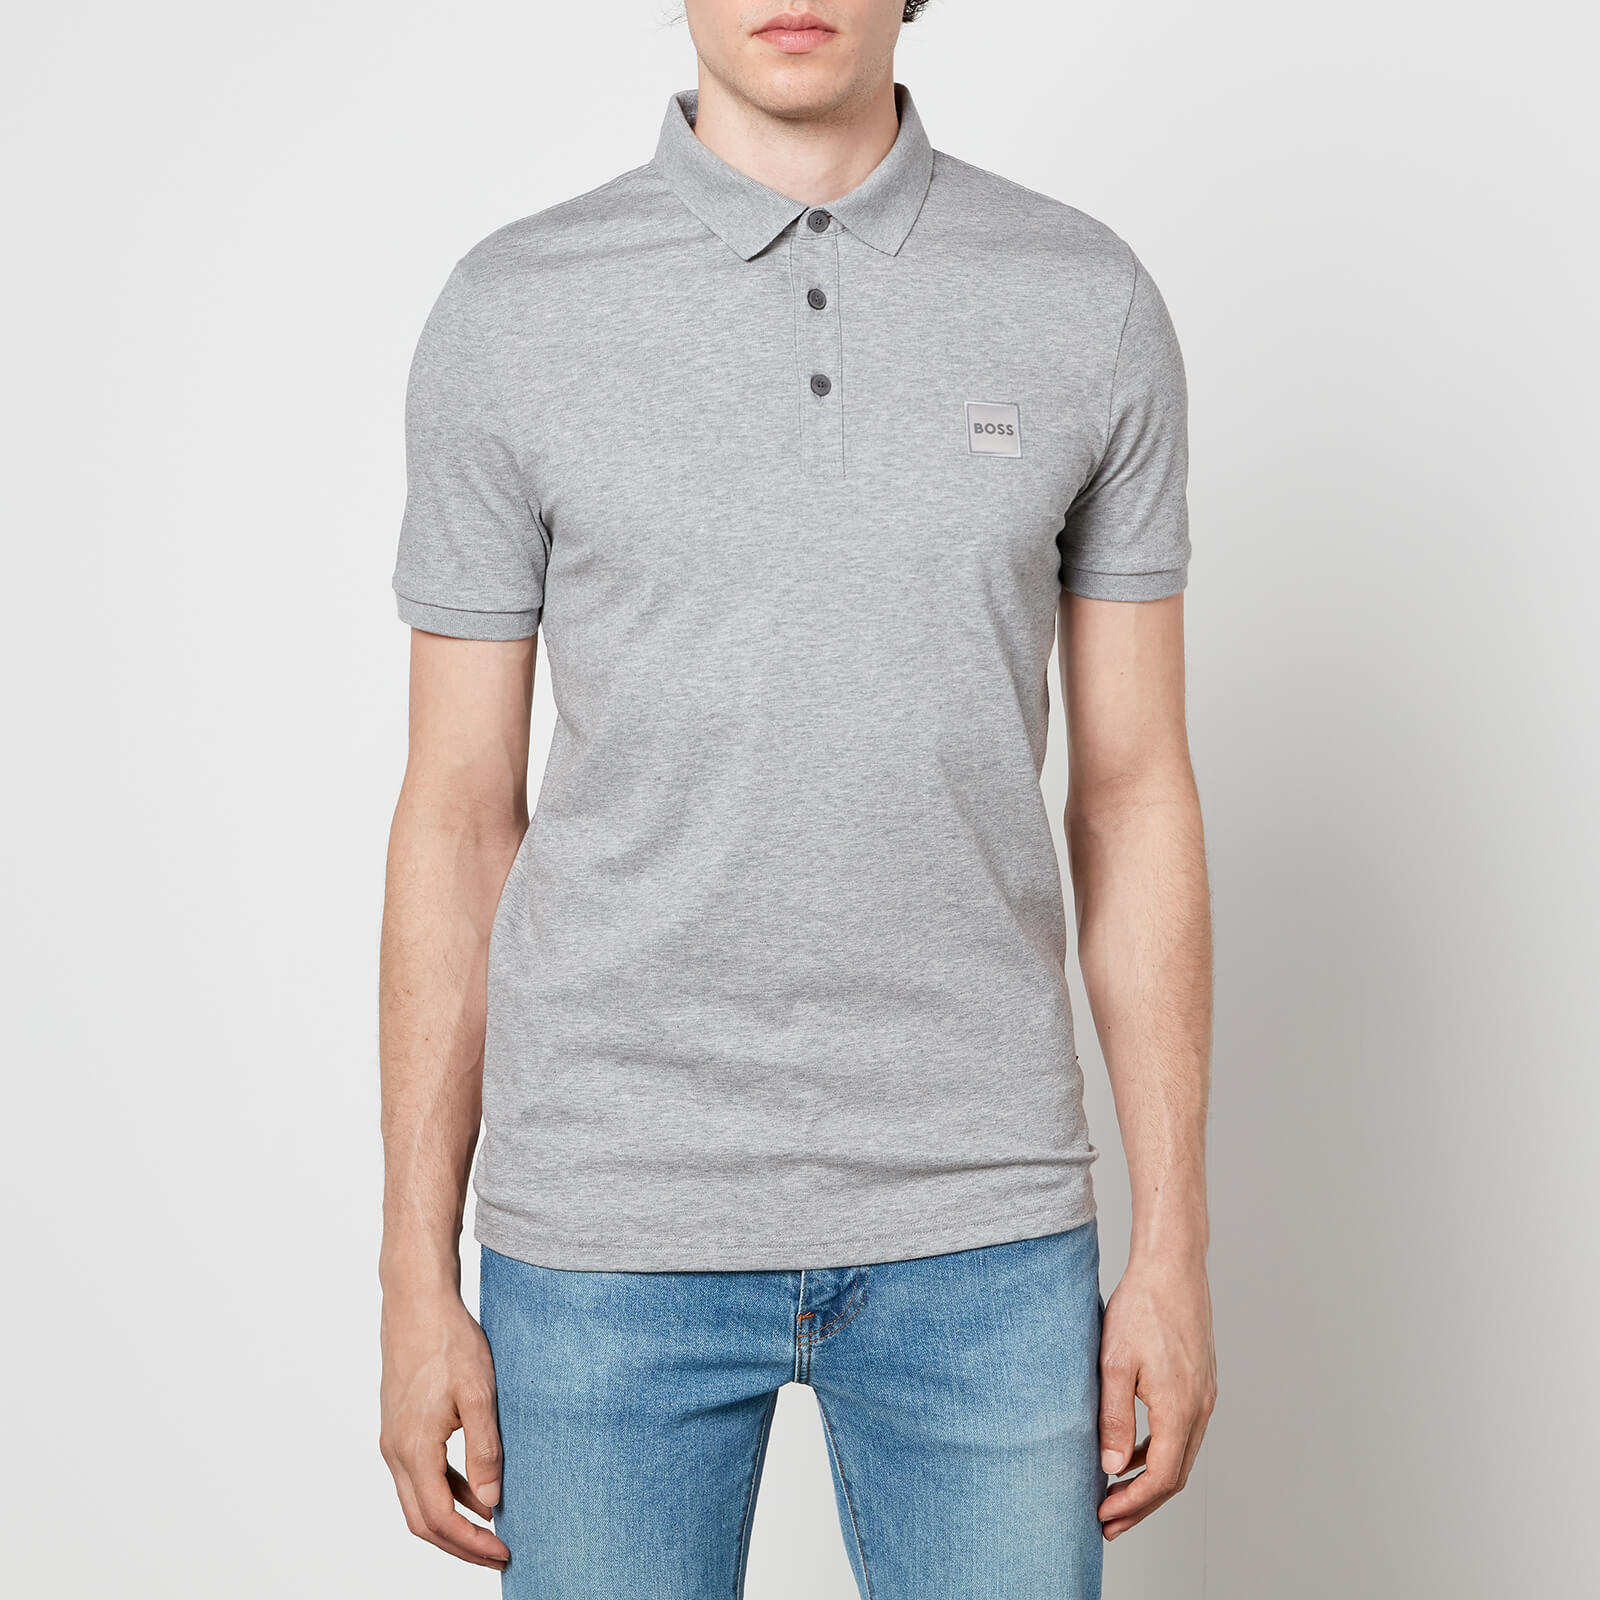 BOSS Casual Men's Passenger Polo Shirt - Light Pastel Grey - S